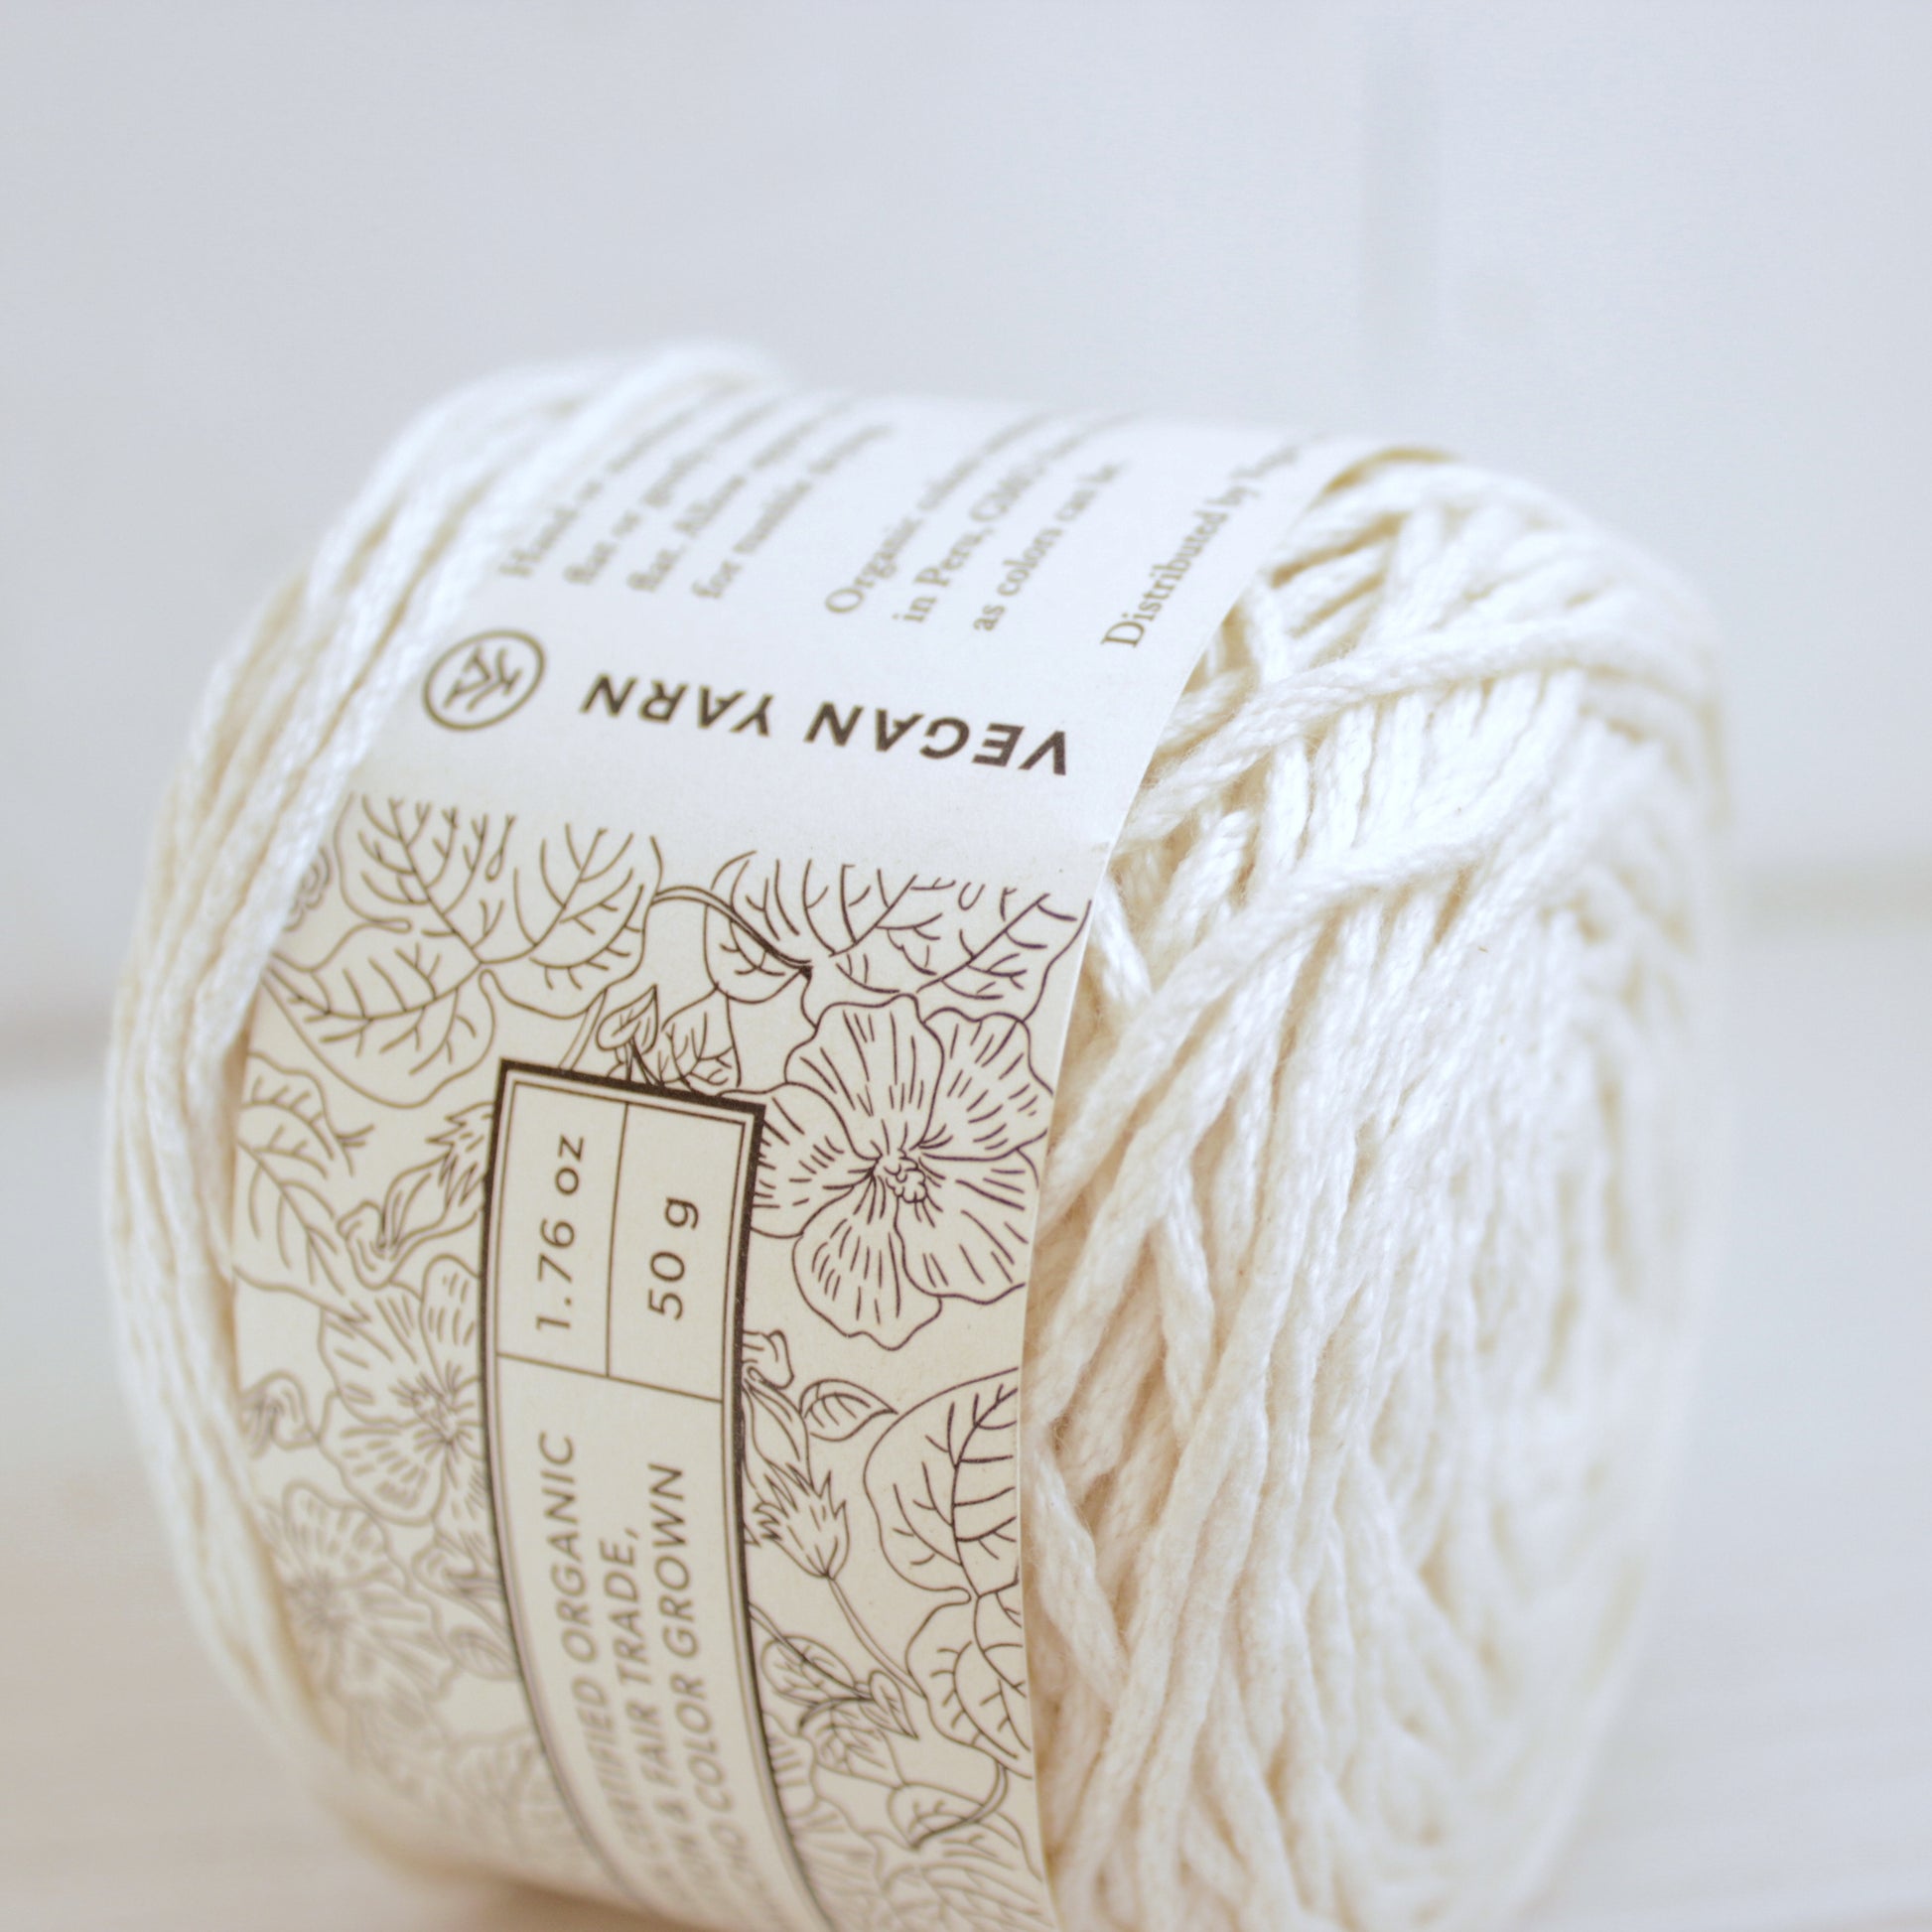 Organic Cotton Knitting Yarn - Worsted